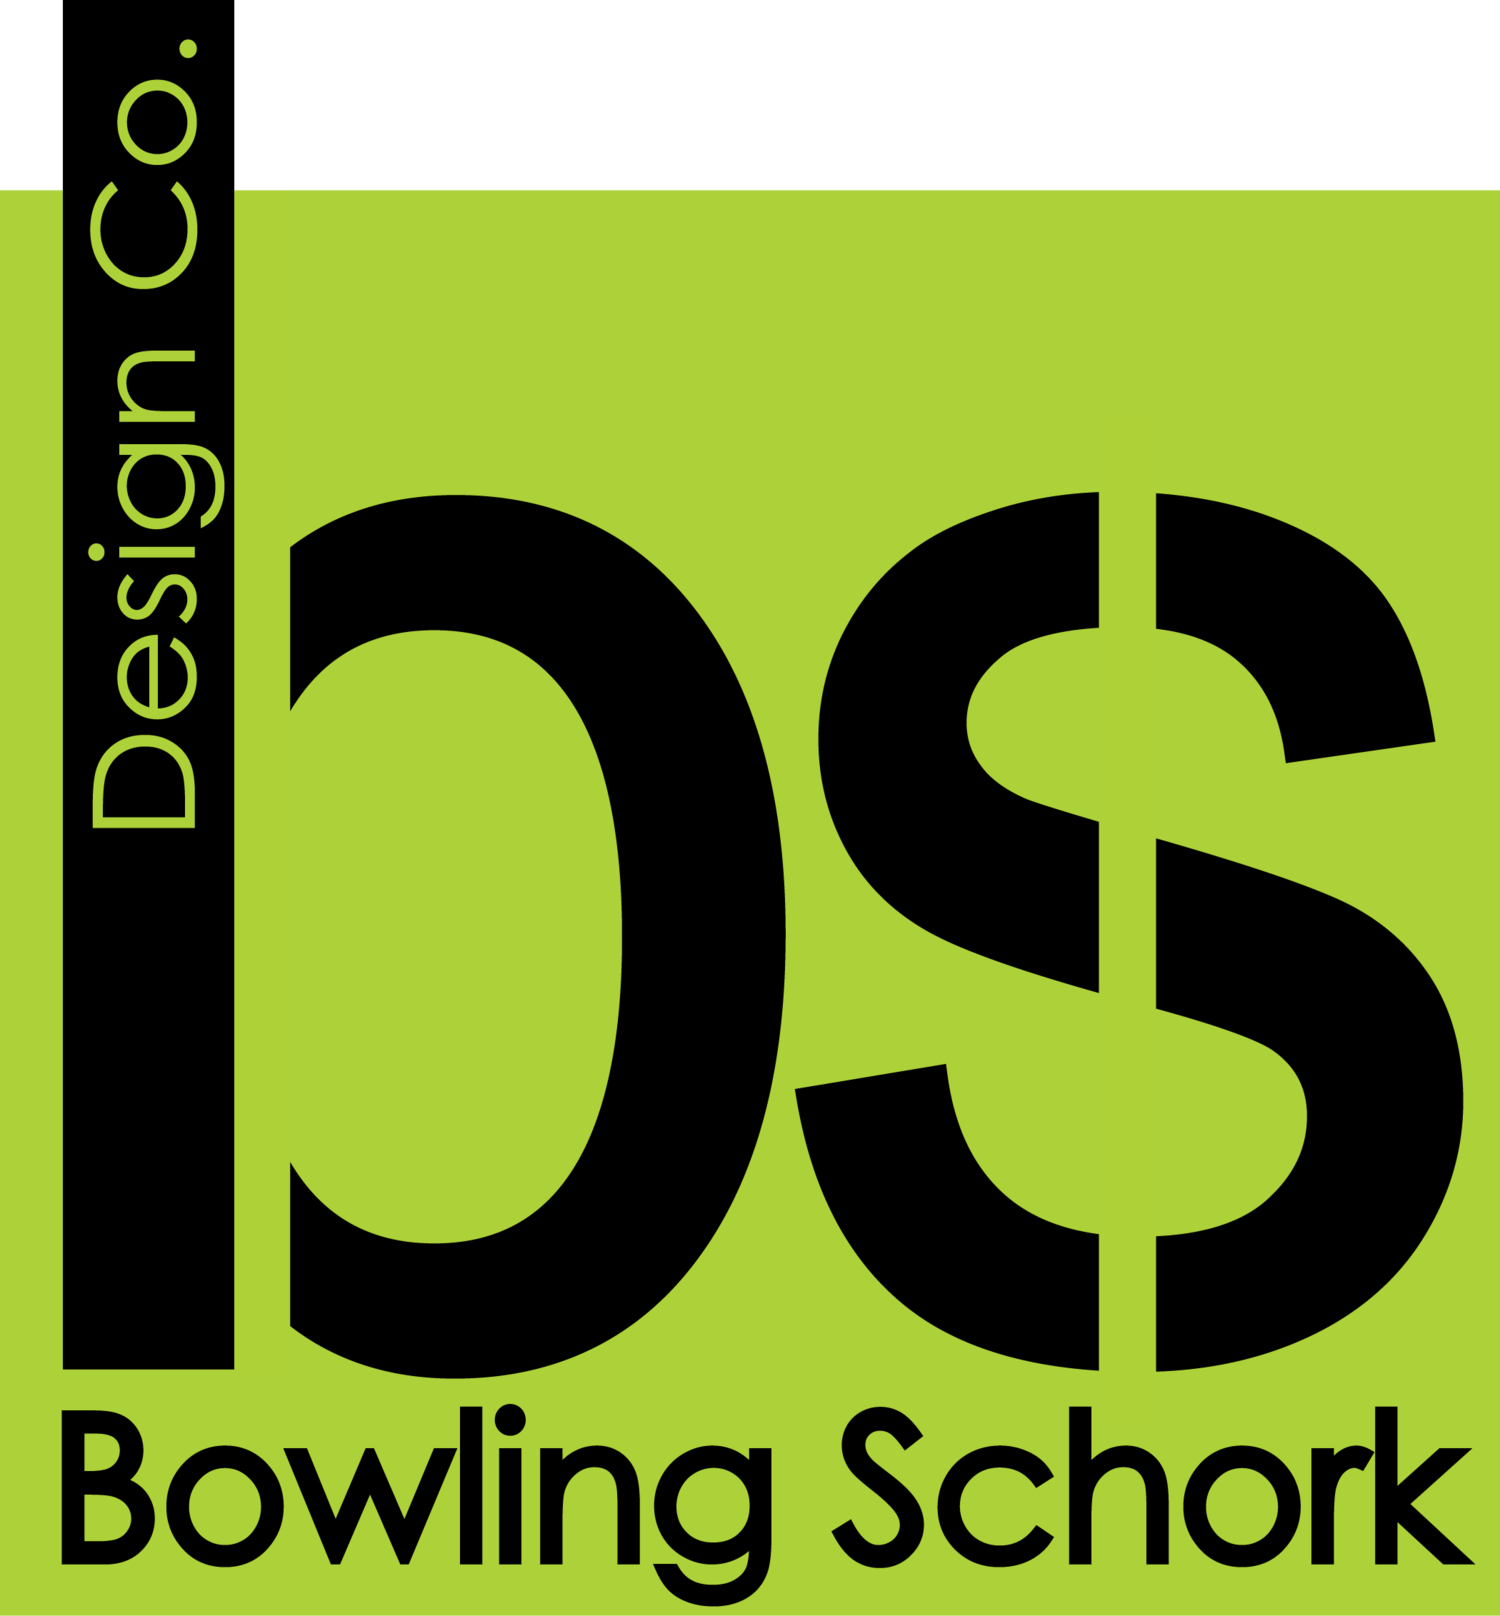 Bowling Schork Design Co.